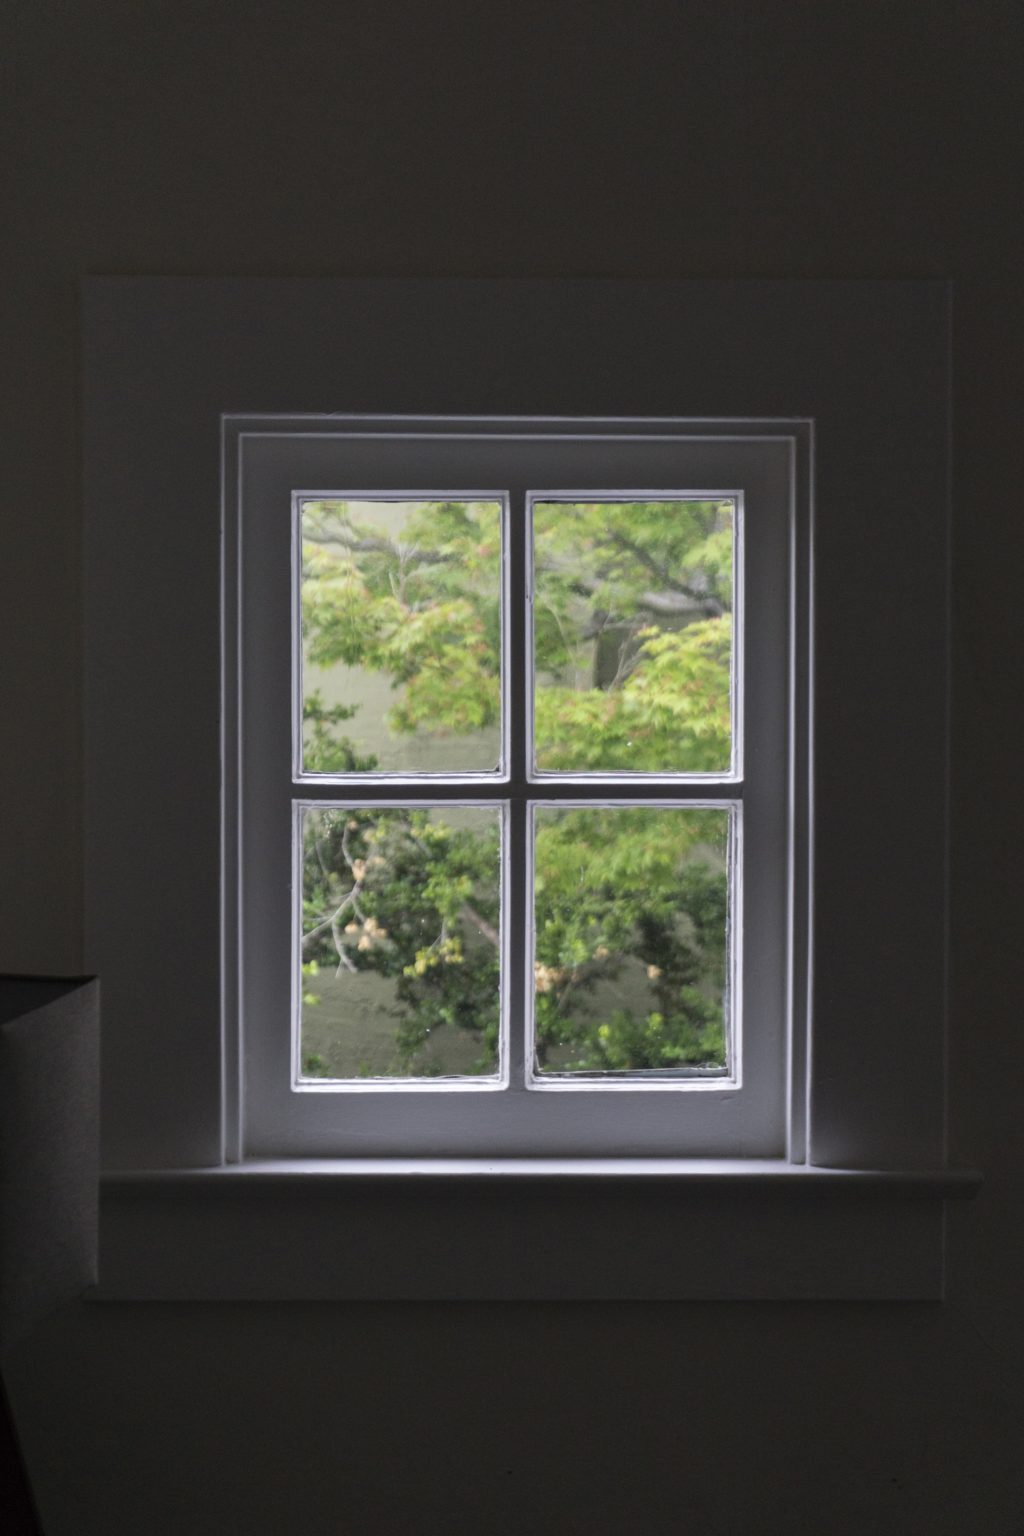 My house has small windows – Espaciel